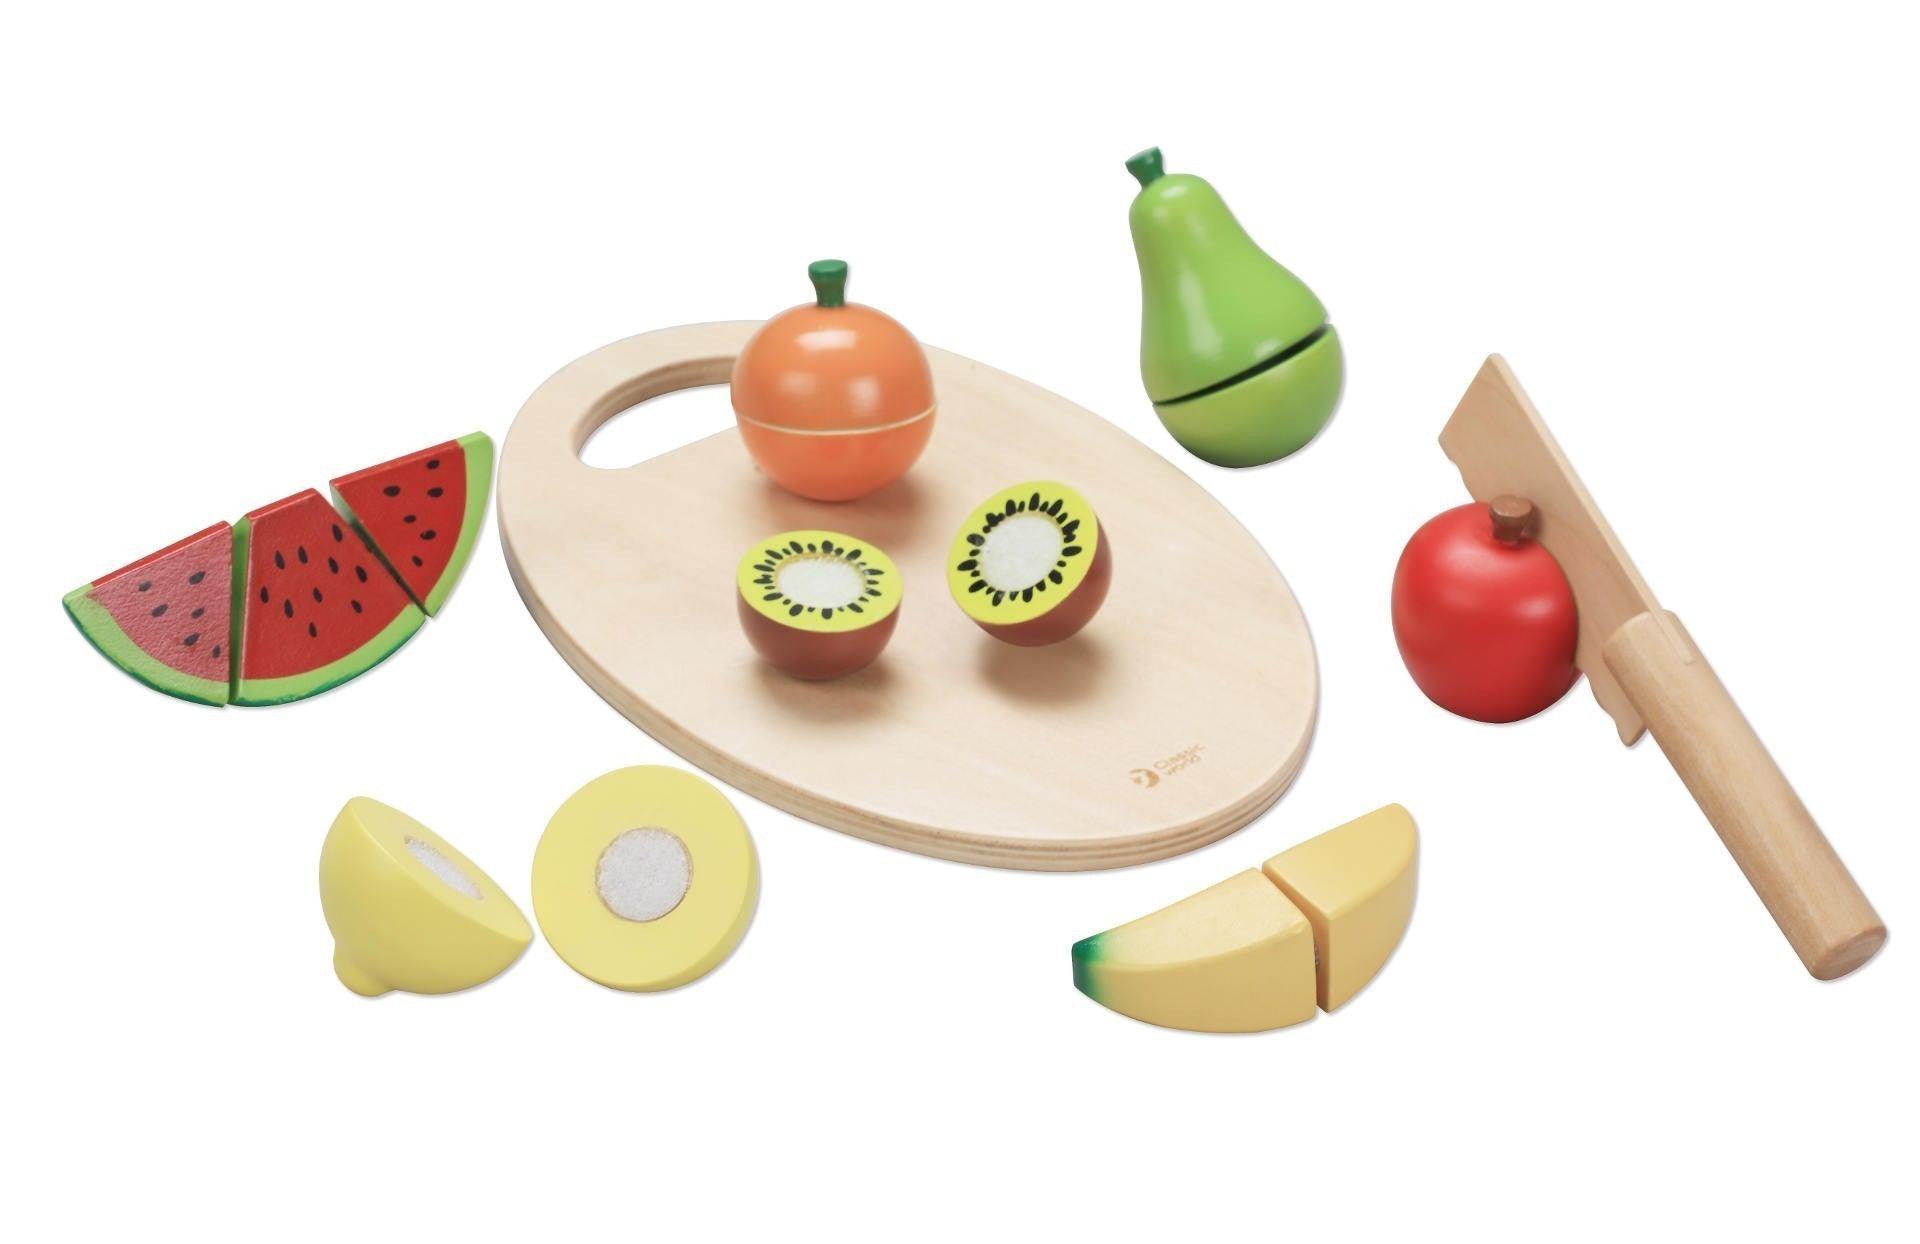 Children's Wooden Cutting Kit - Fruits - MoonyBoon